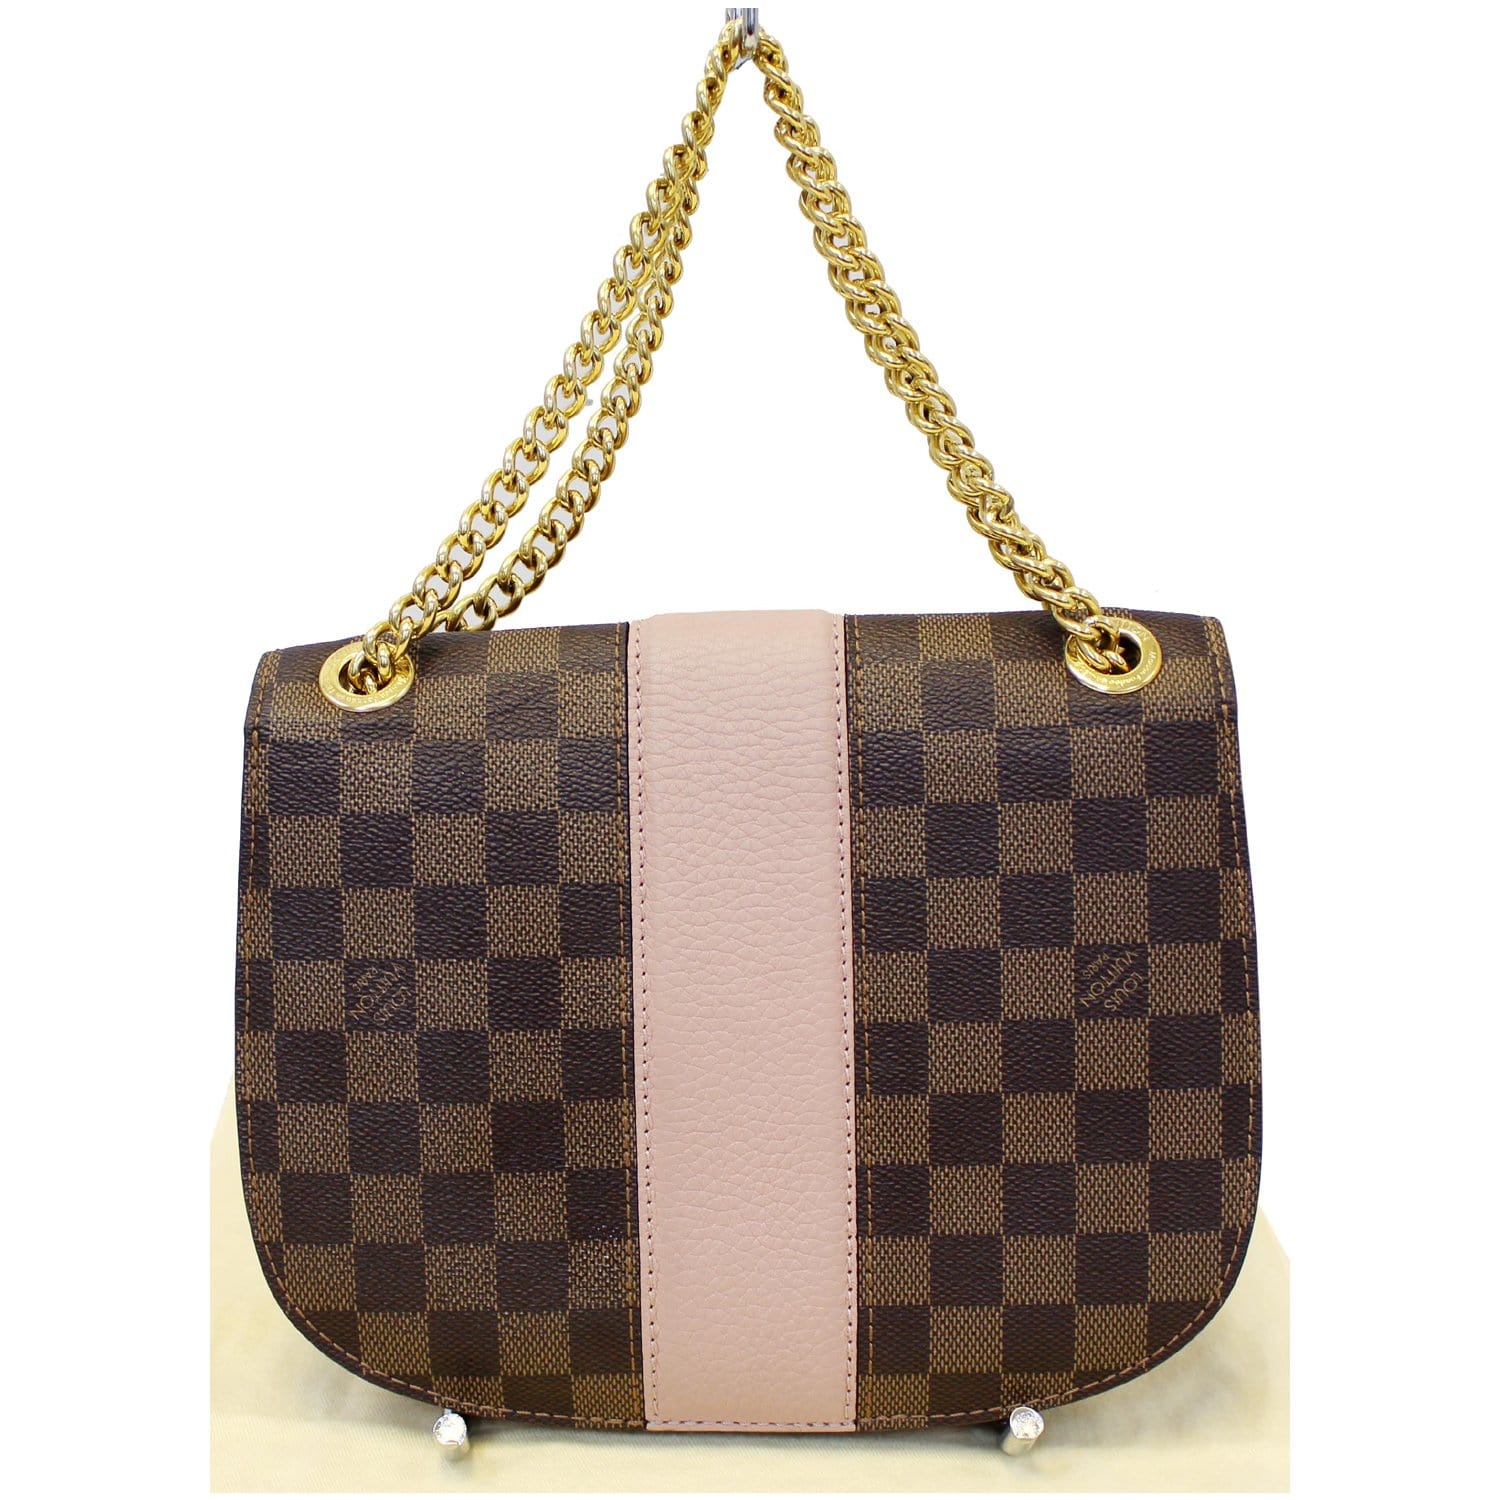 NEW** Louis Vuitton Monogram & Damier Ebene Handbag Limited Edition  Crossbody